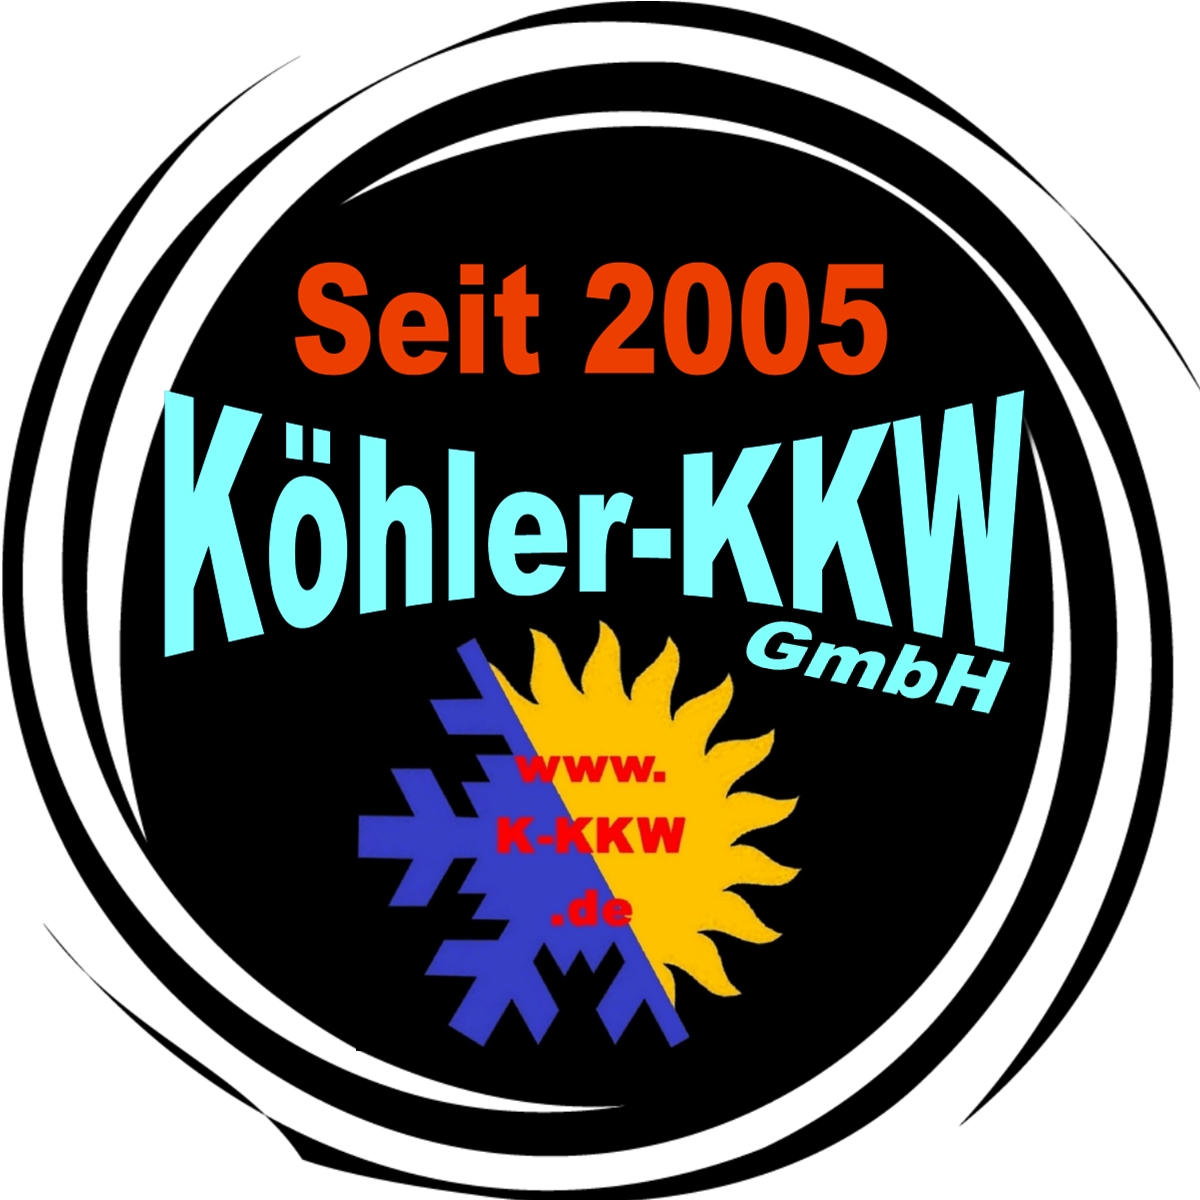 GmbH 2005kkw